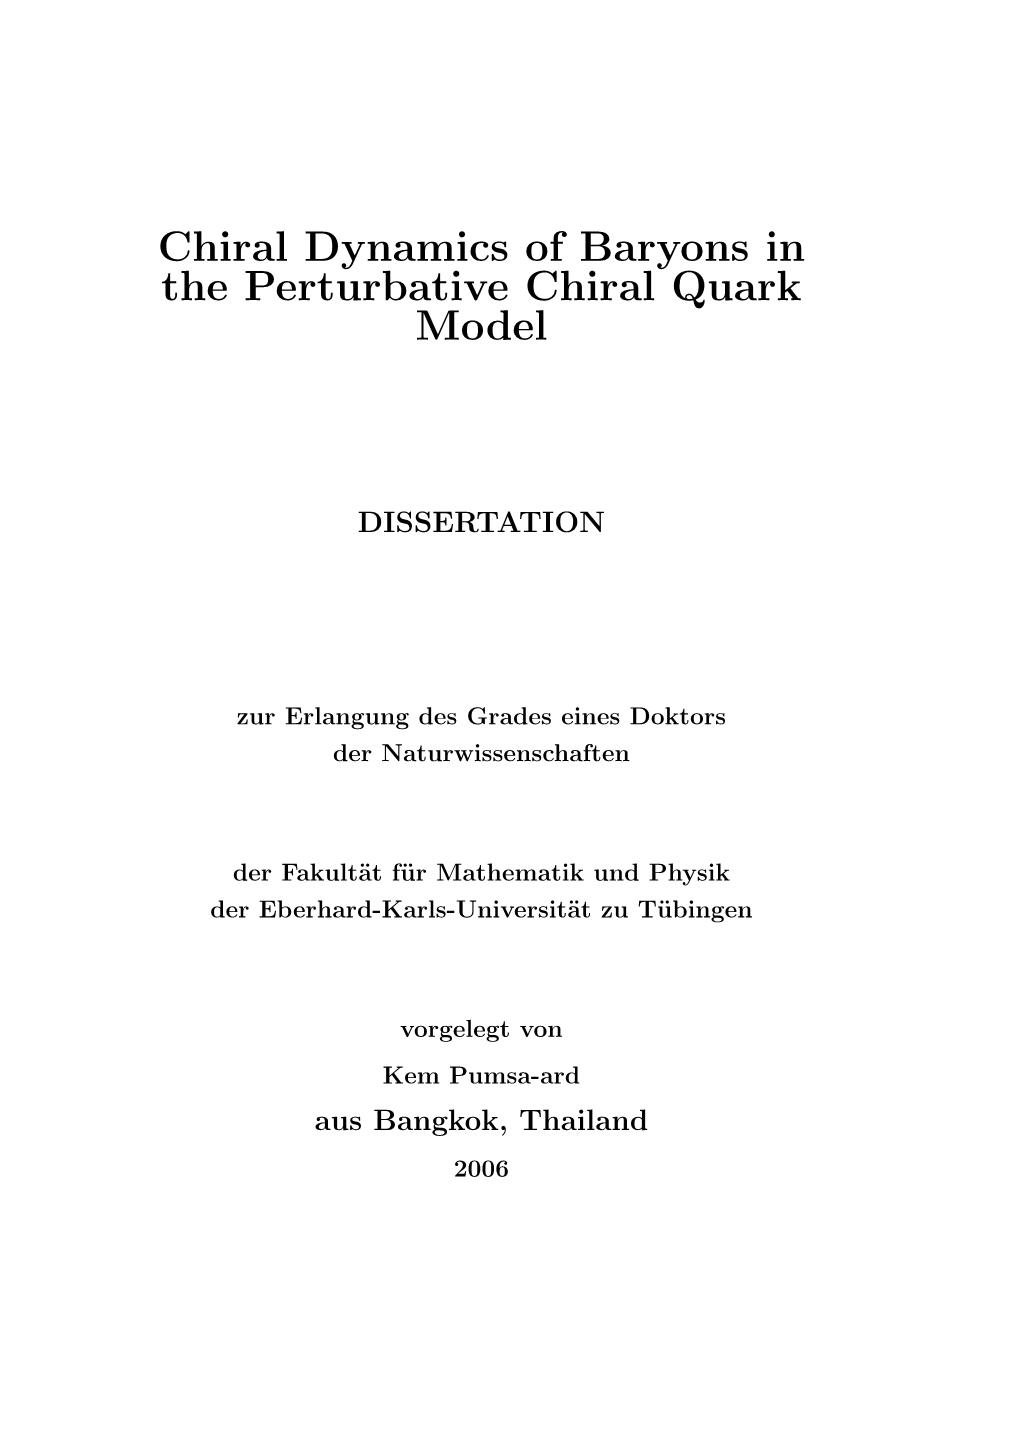 Chiral Dynamics of Baryons in the Perturbative Chiral Quark Model